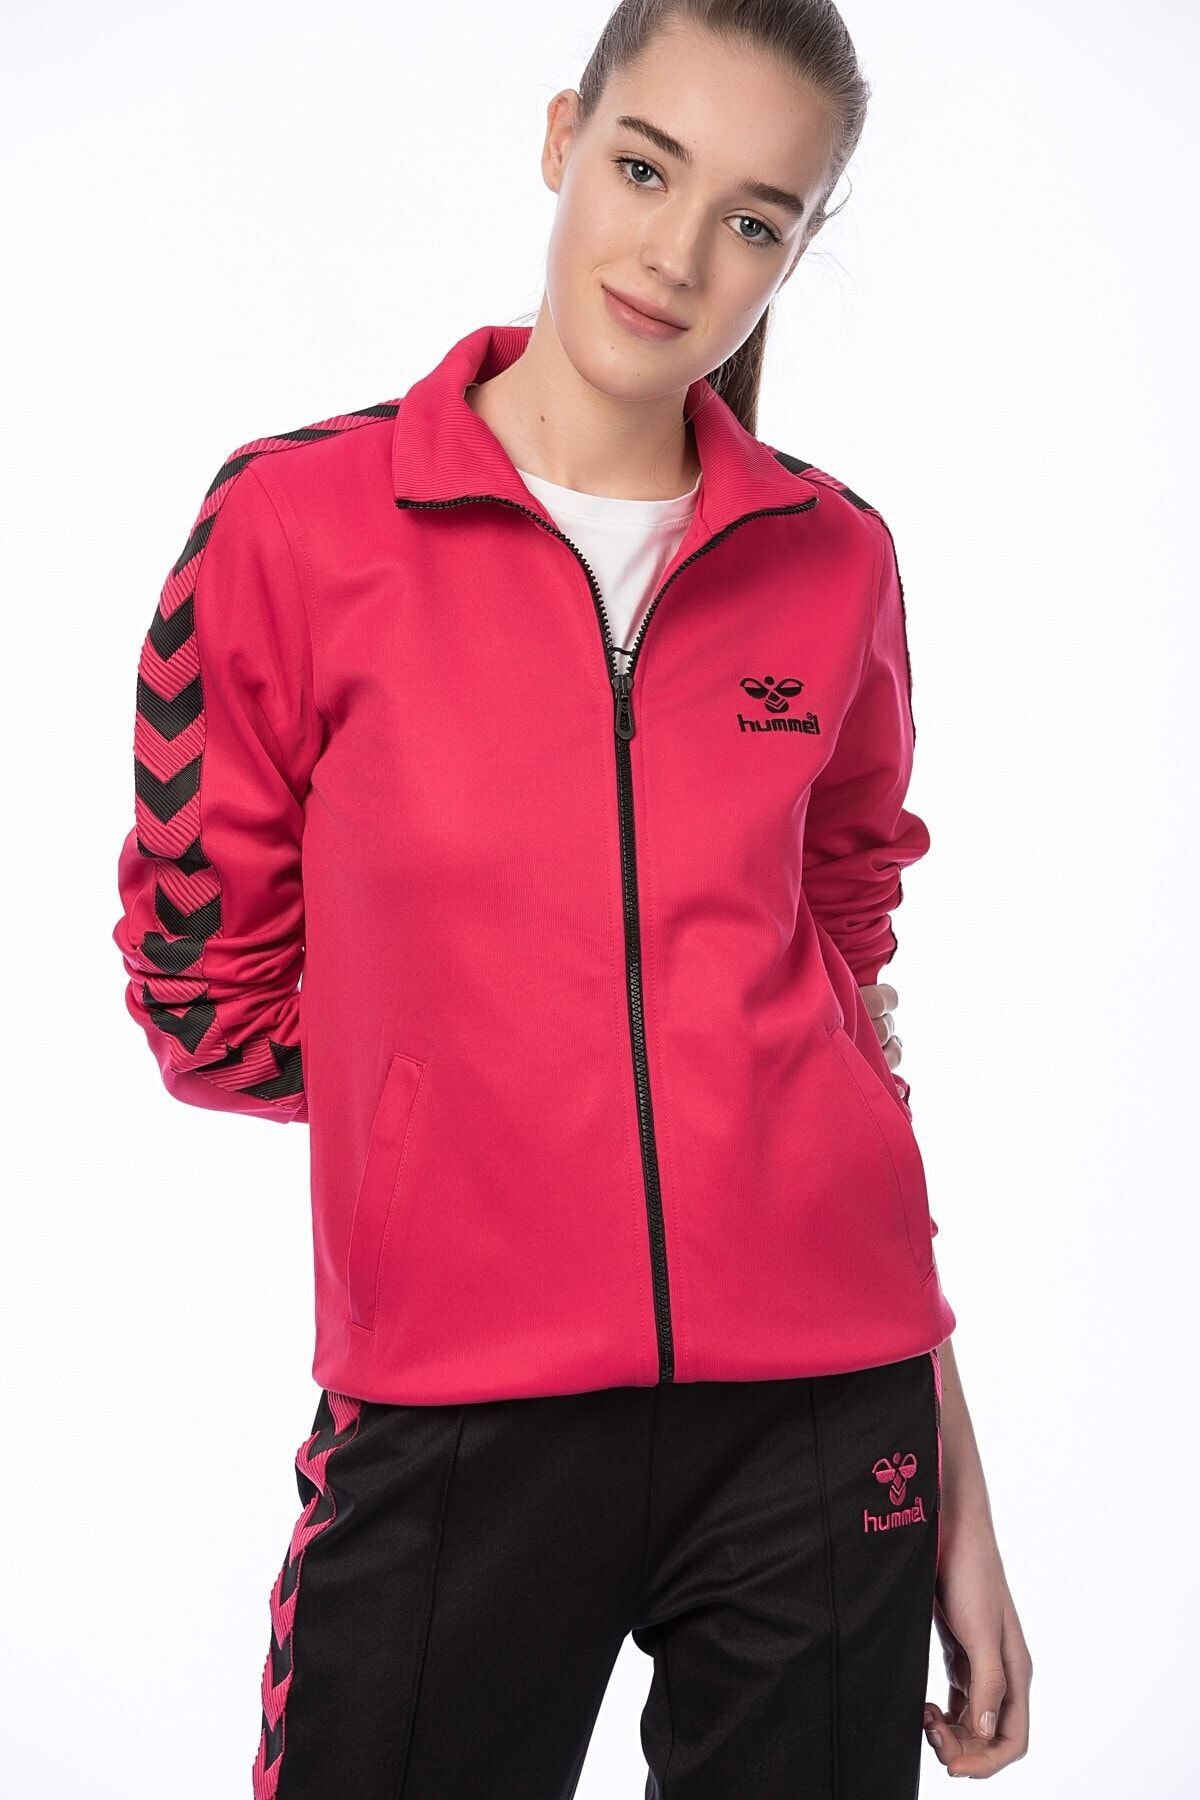 hummel Kadın Sweatshirt Atlanta Zıp Jacket Ss17